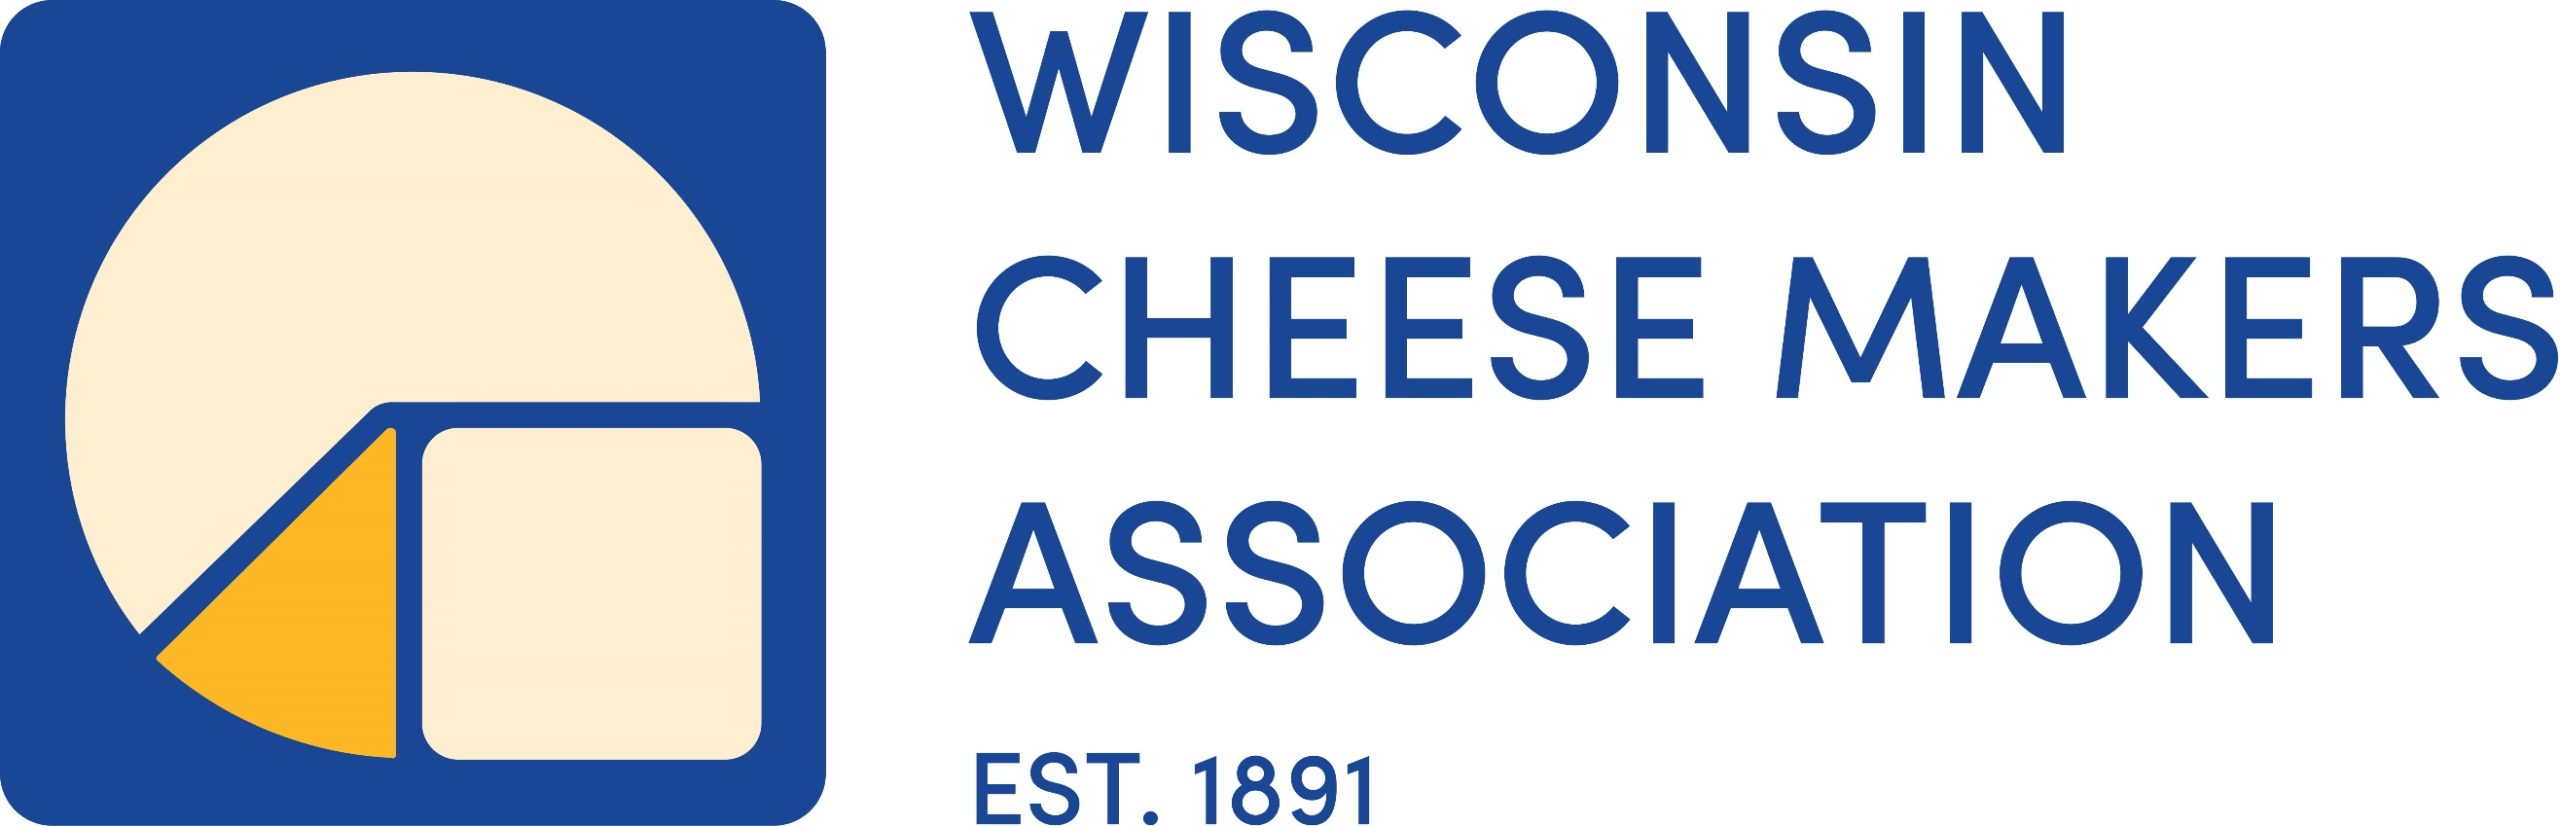 Cheese Makers Applaud Proposed Bills